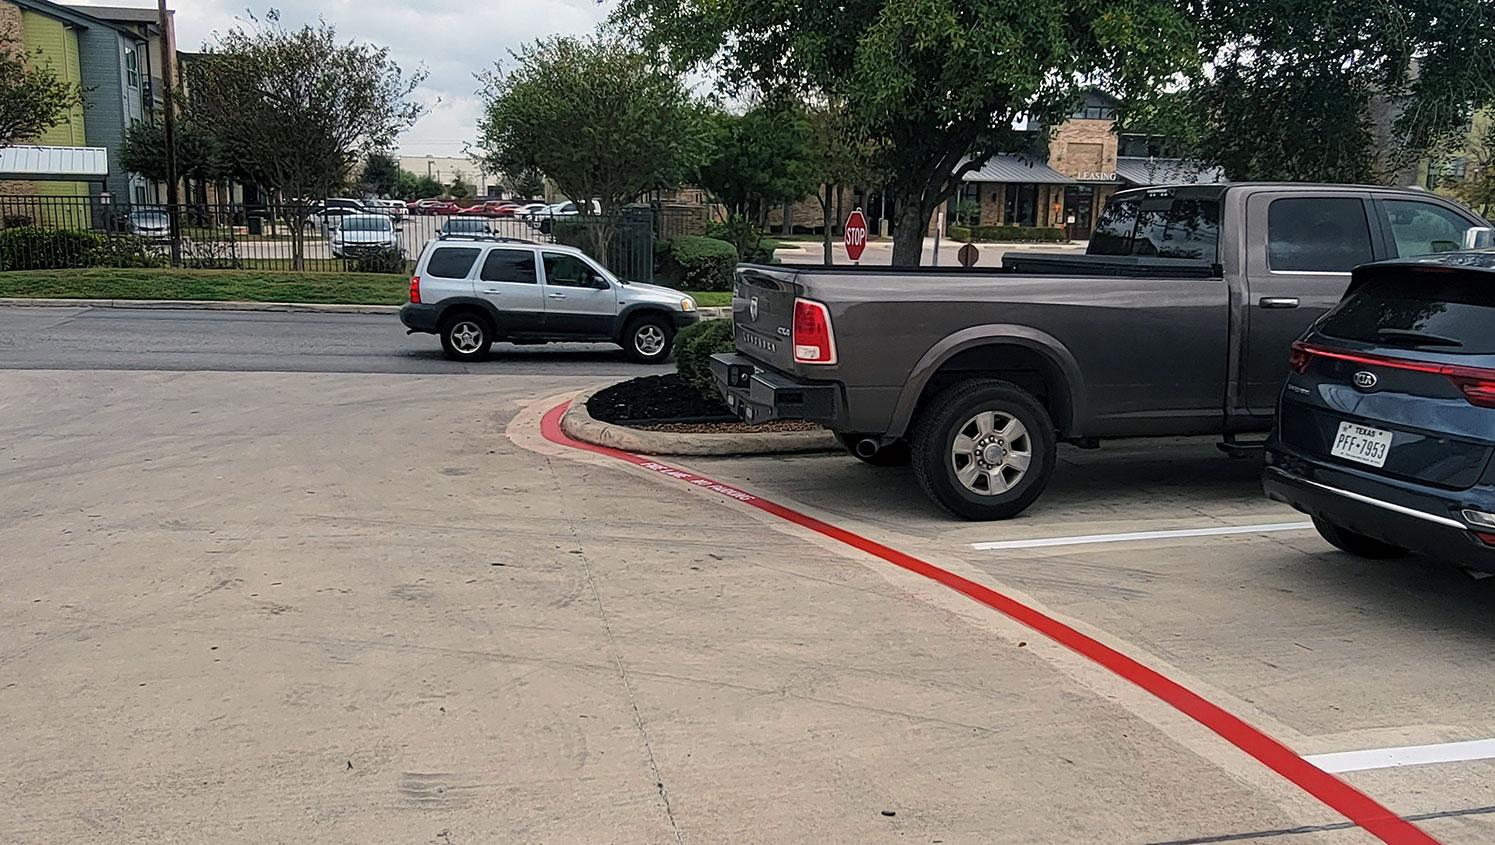 newly striped parking lot markings